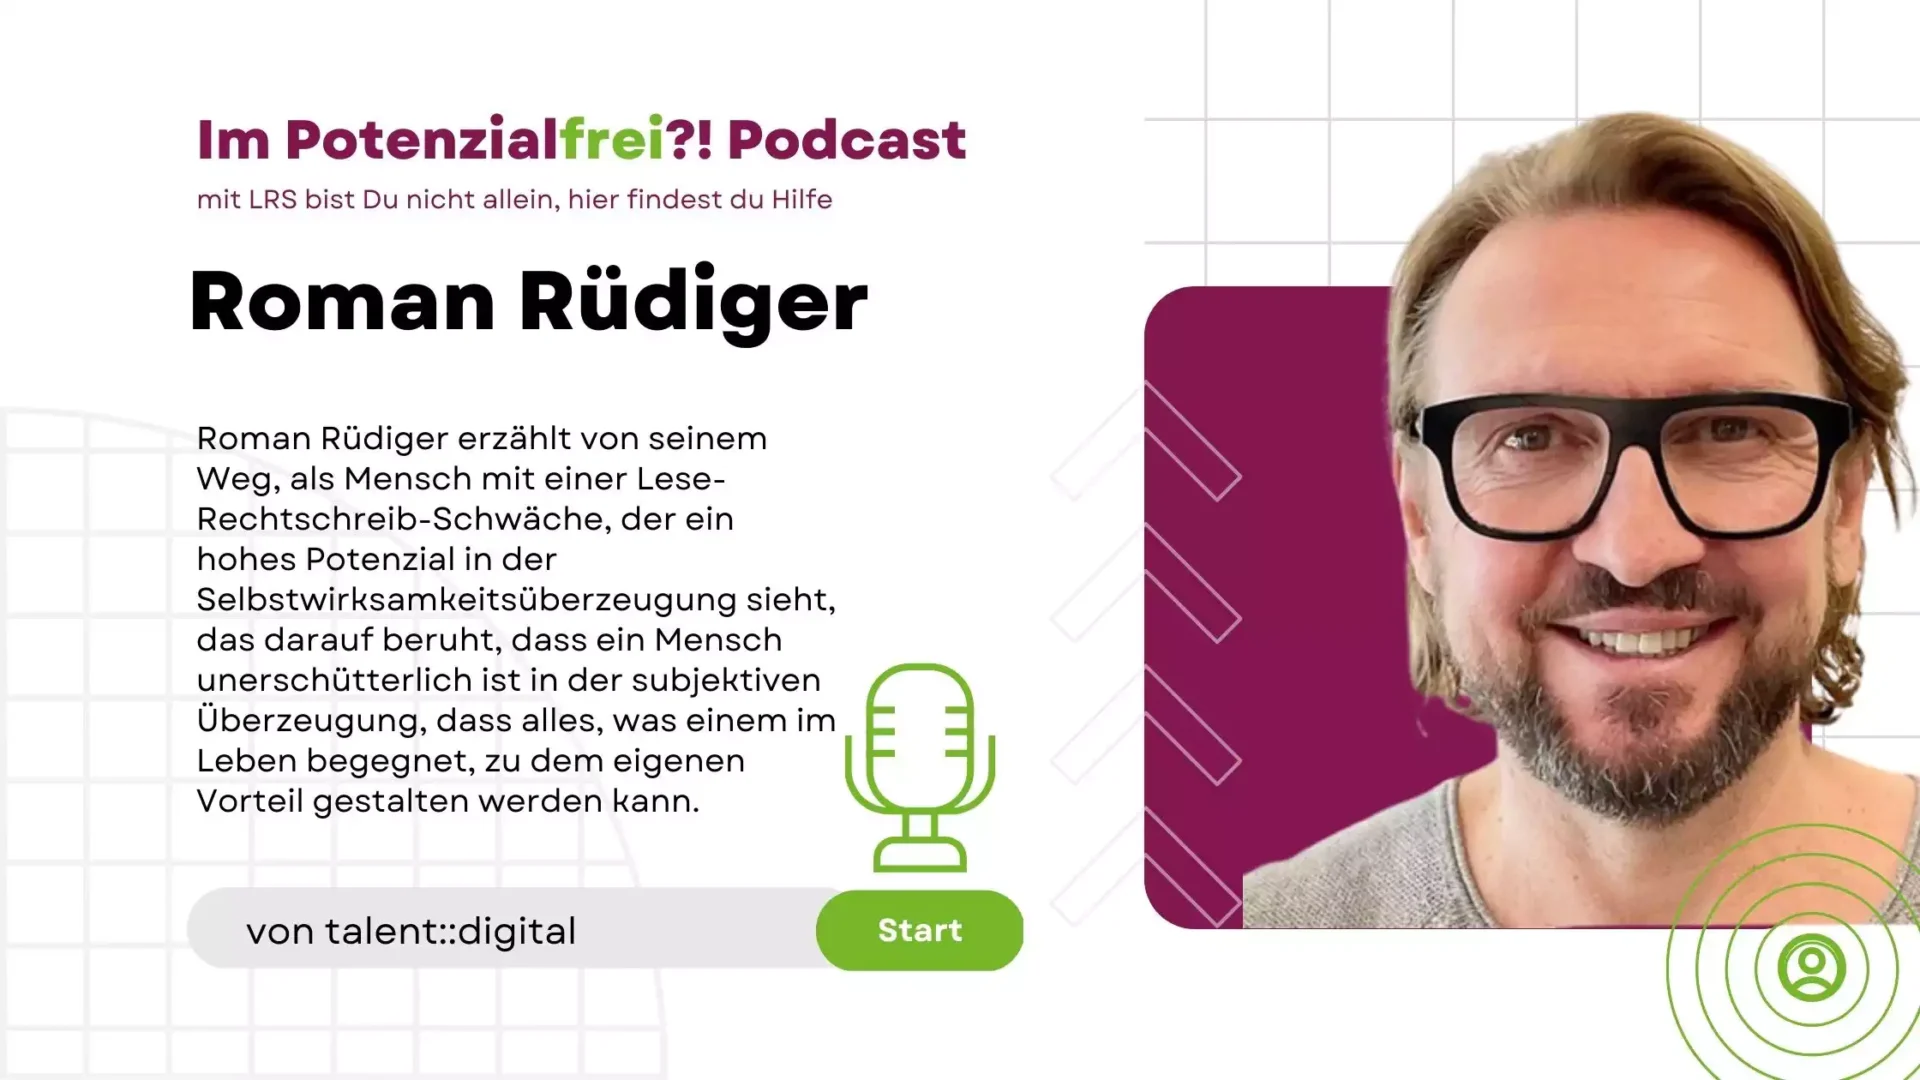 Roman Rüdiger von talentdigital im Potenzialfrei! Podcast